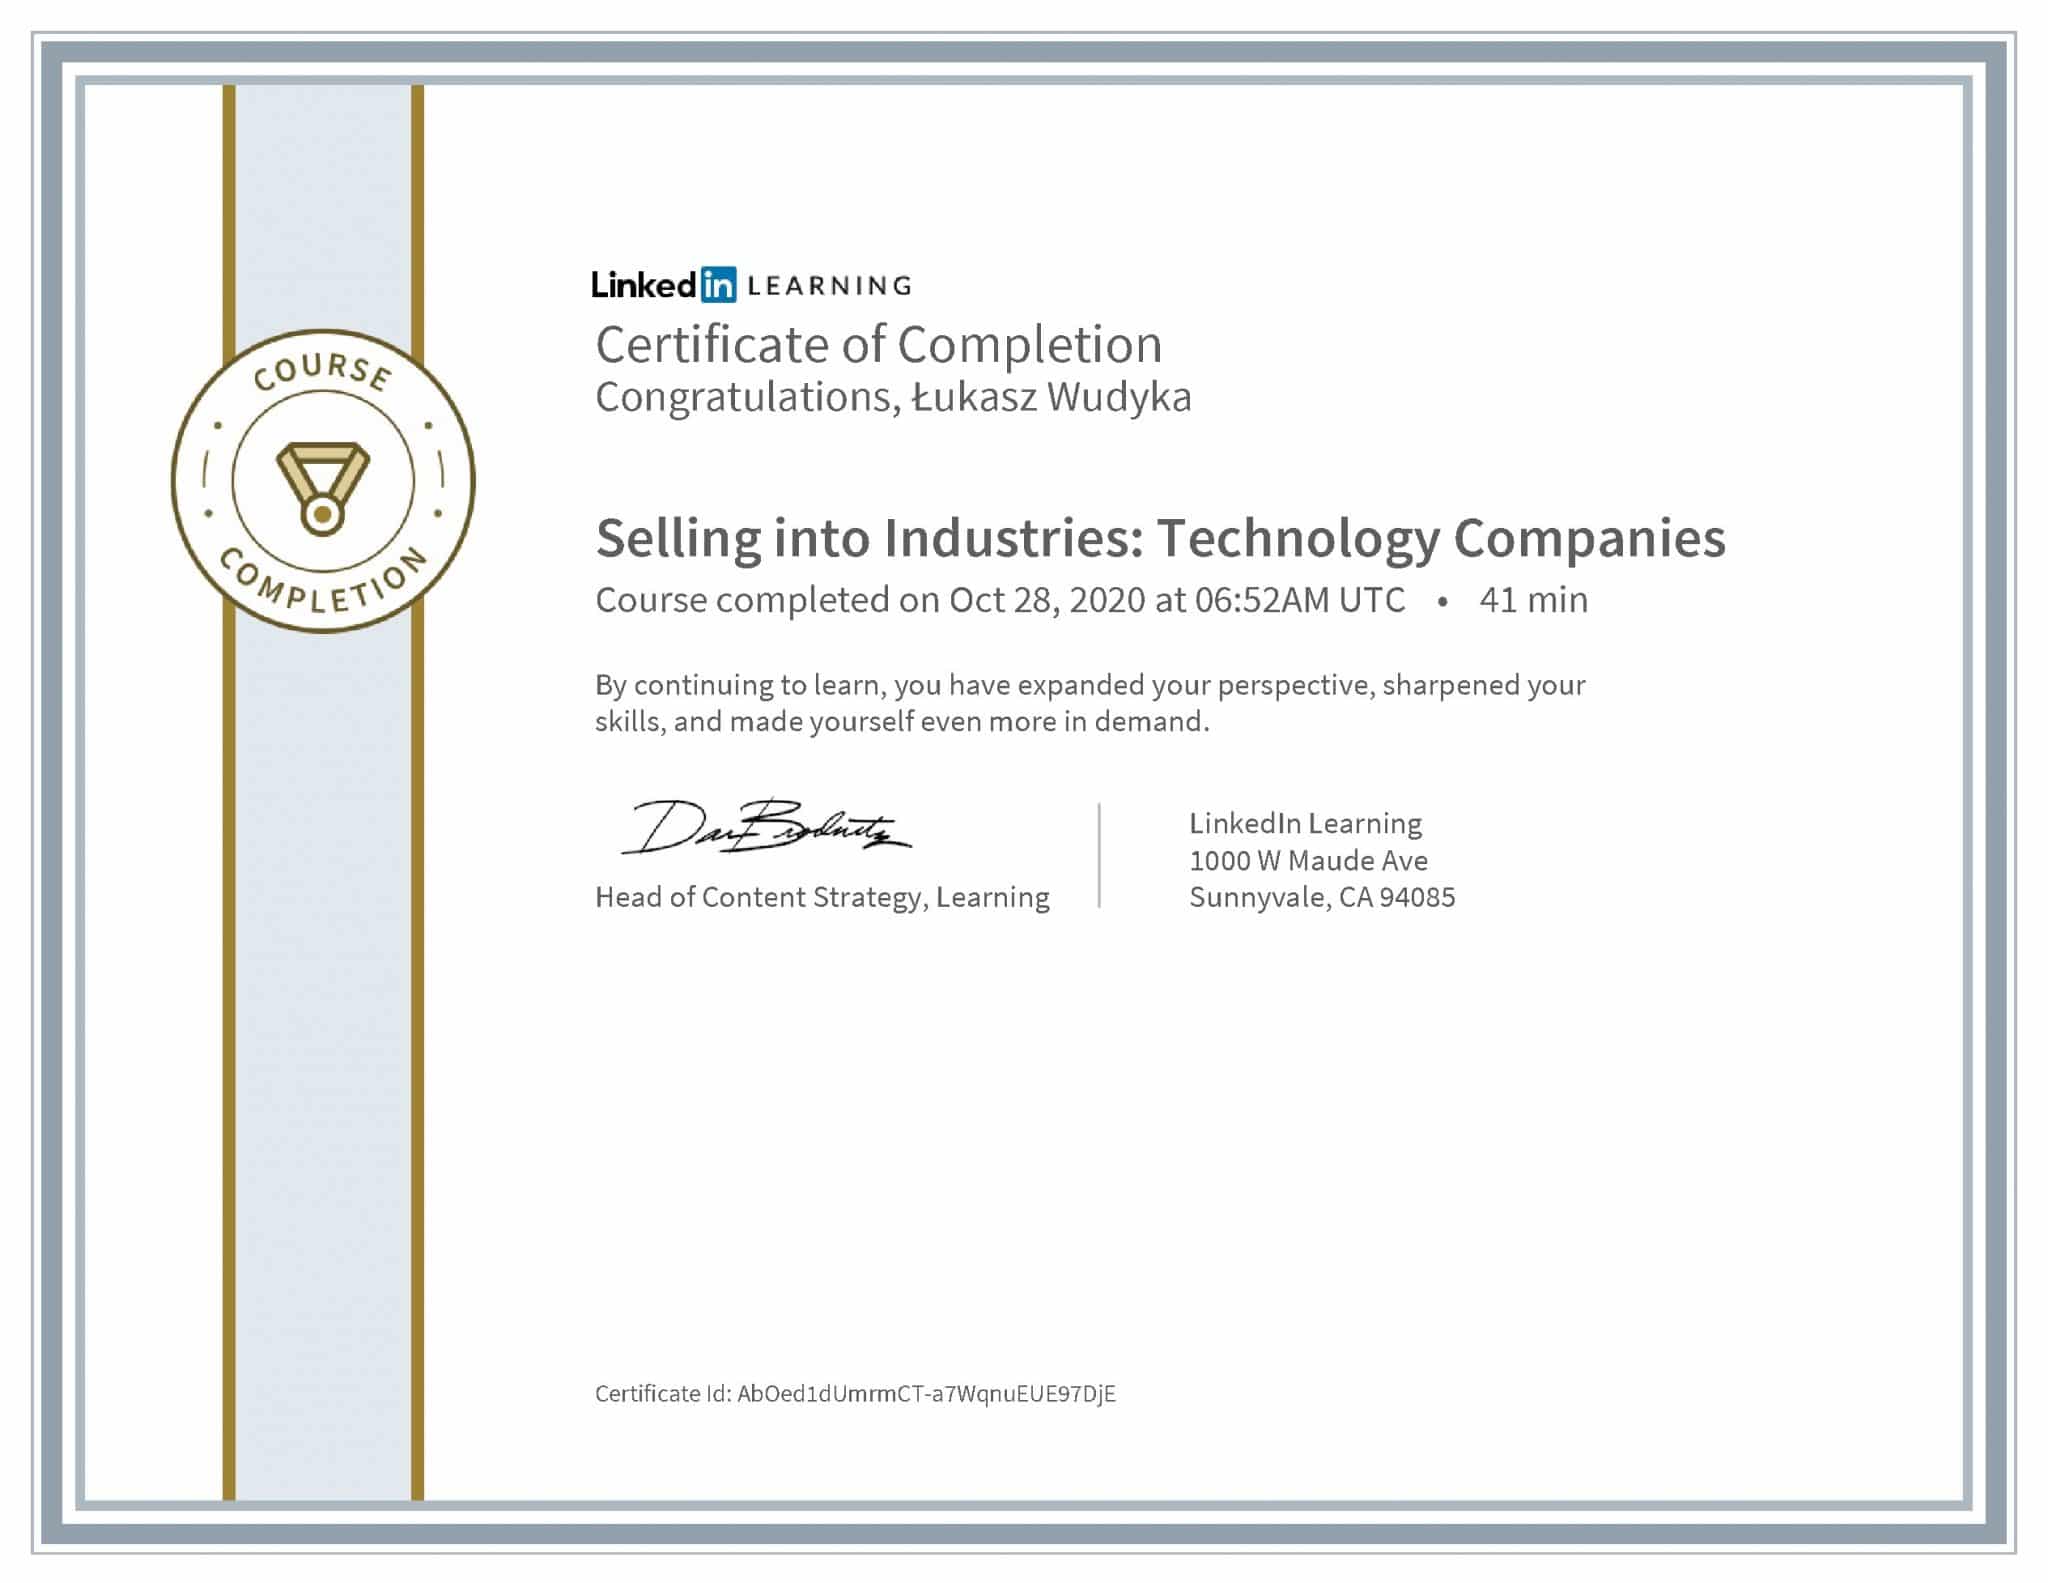 Łukasz Wudyka certyfikat LinkedIn Selling into Industries: Technology Companies